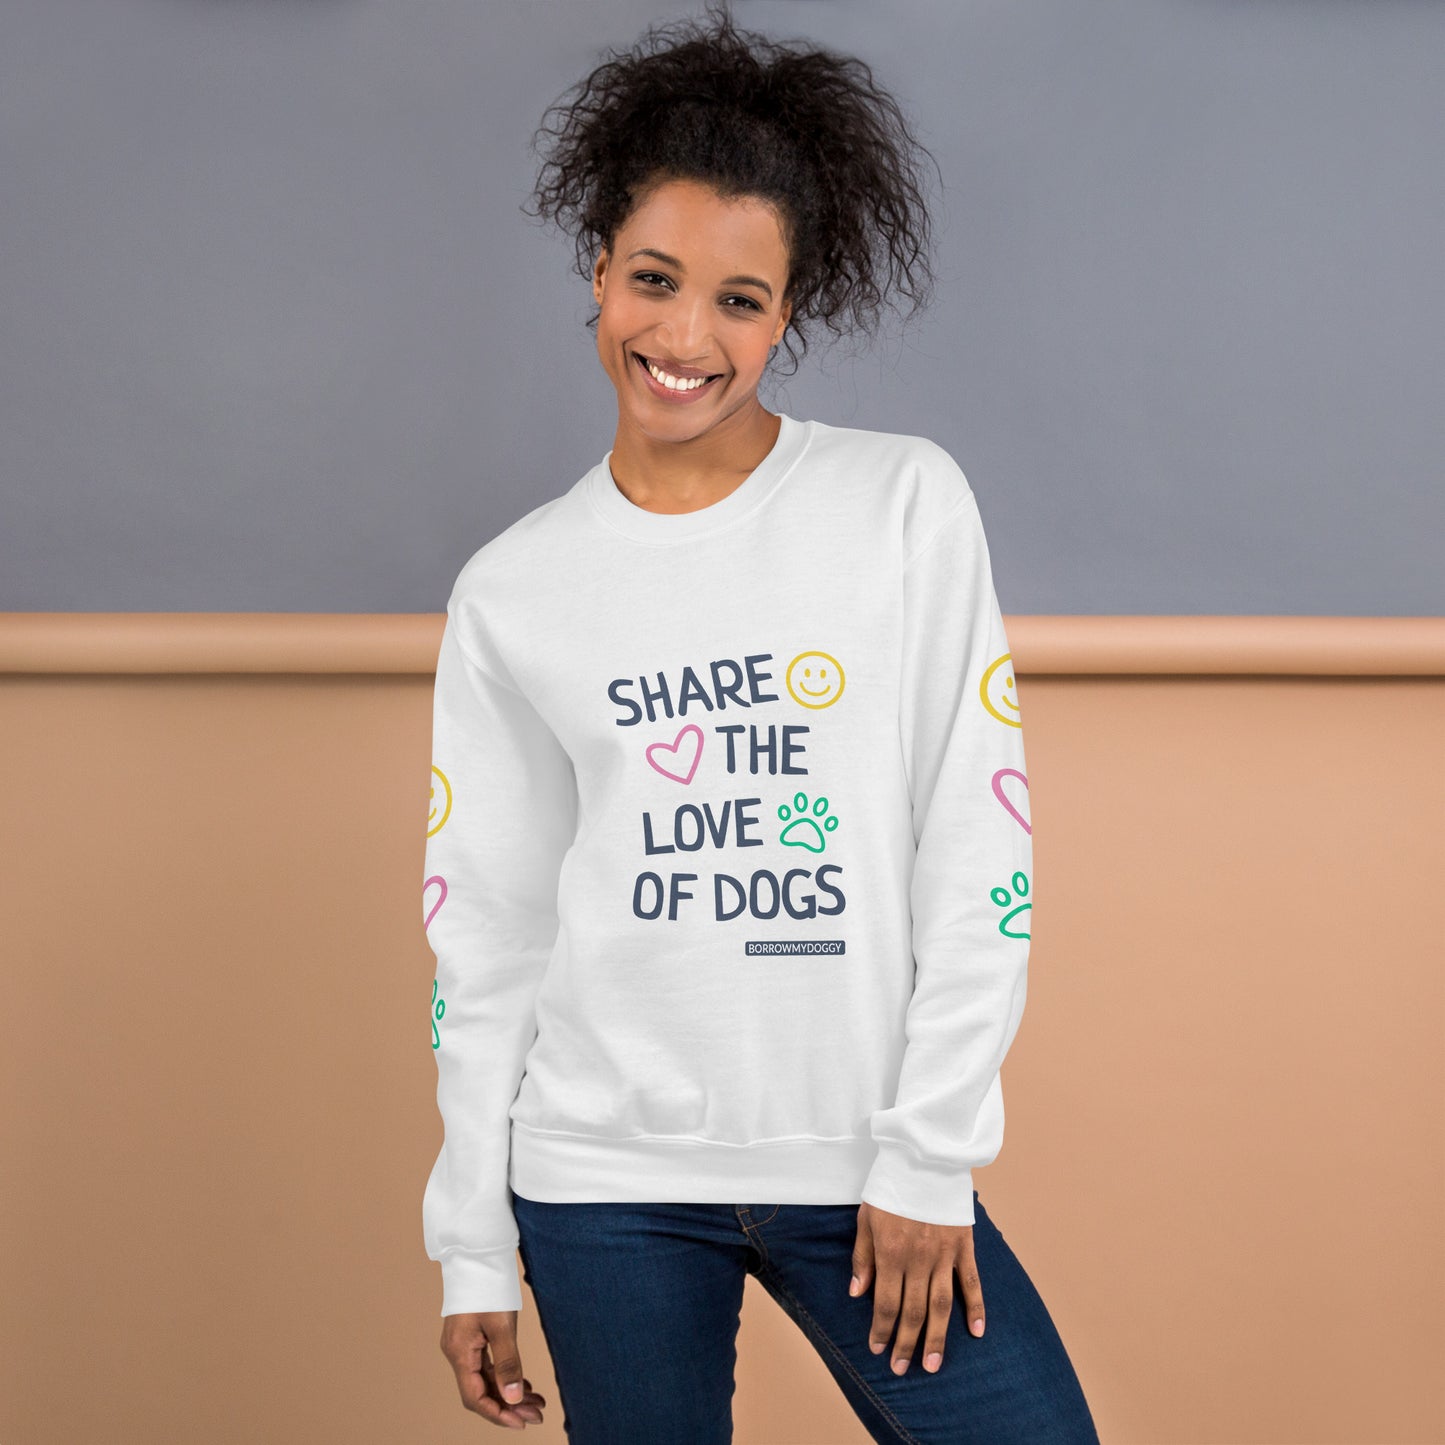 Share the love unisex sweatshirt